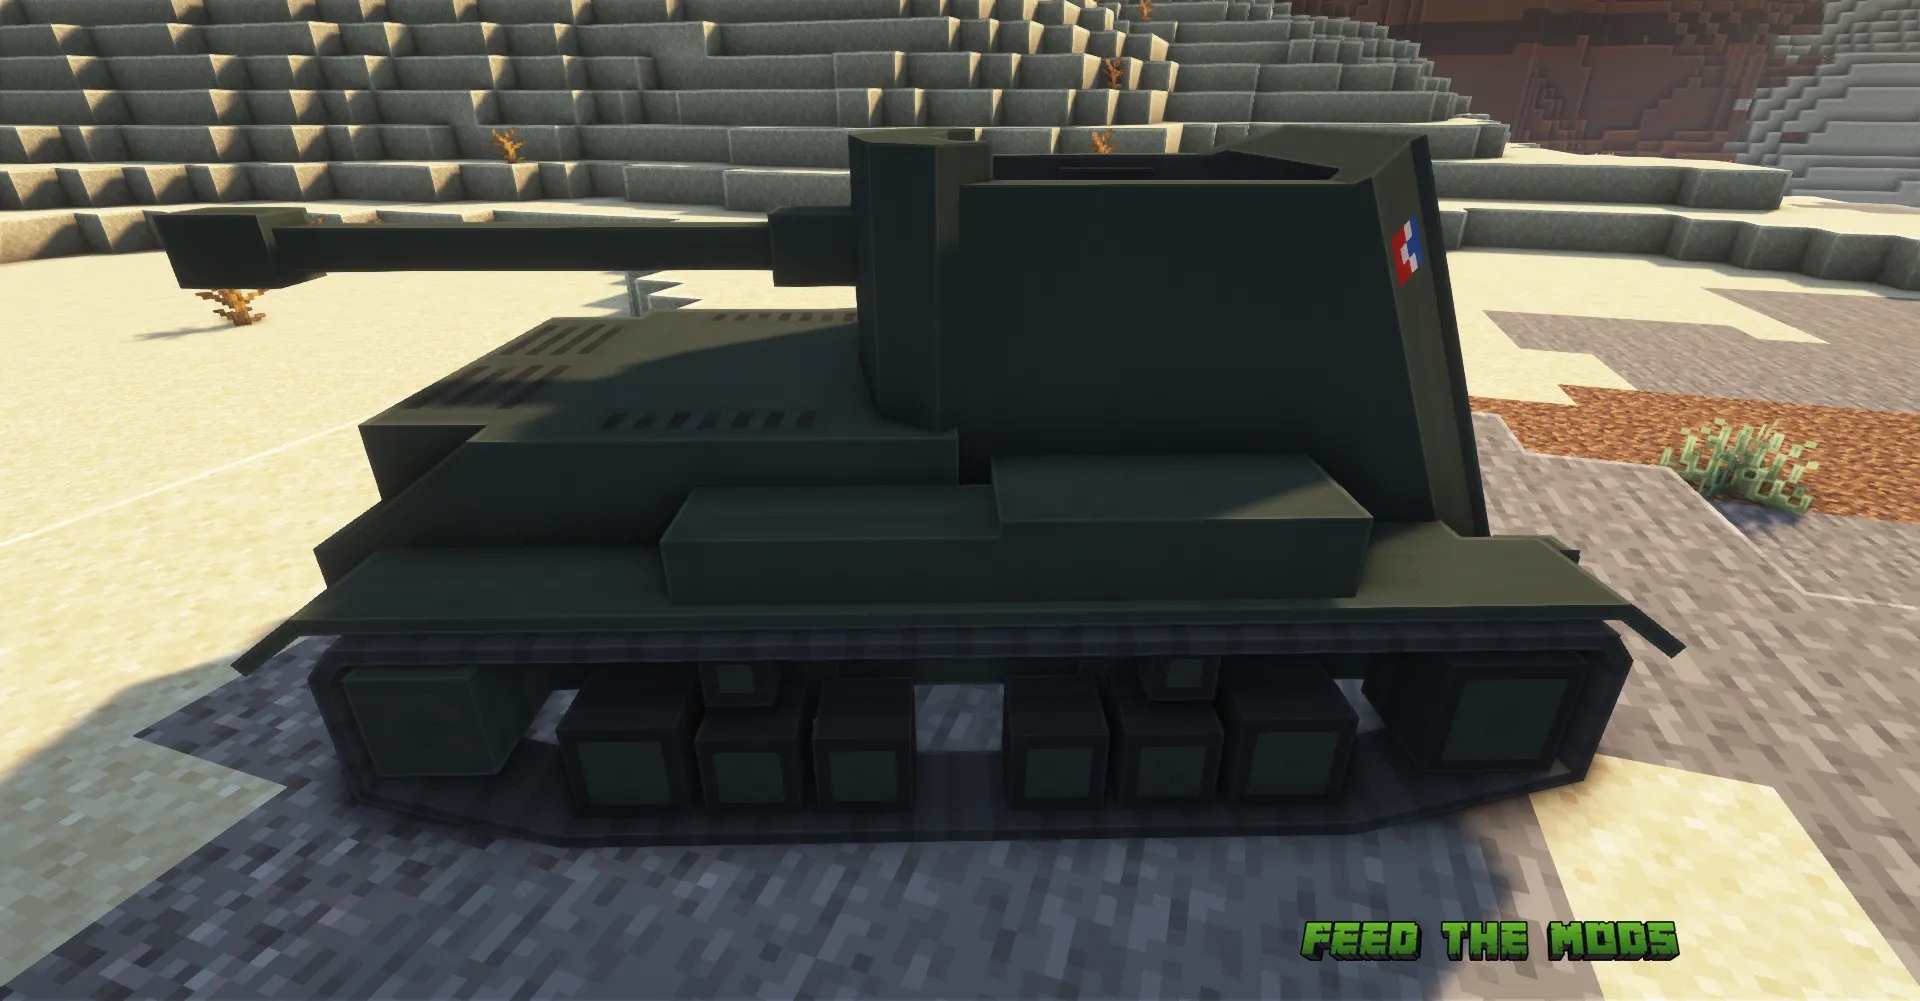 Trajans Tanks Mod 9 - FTM